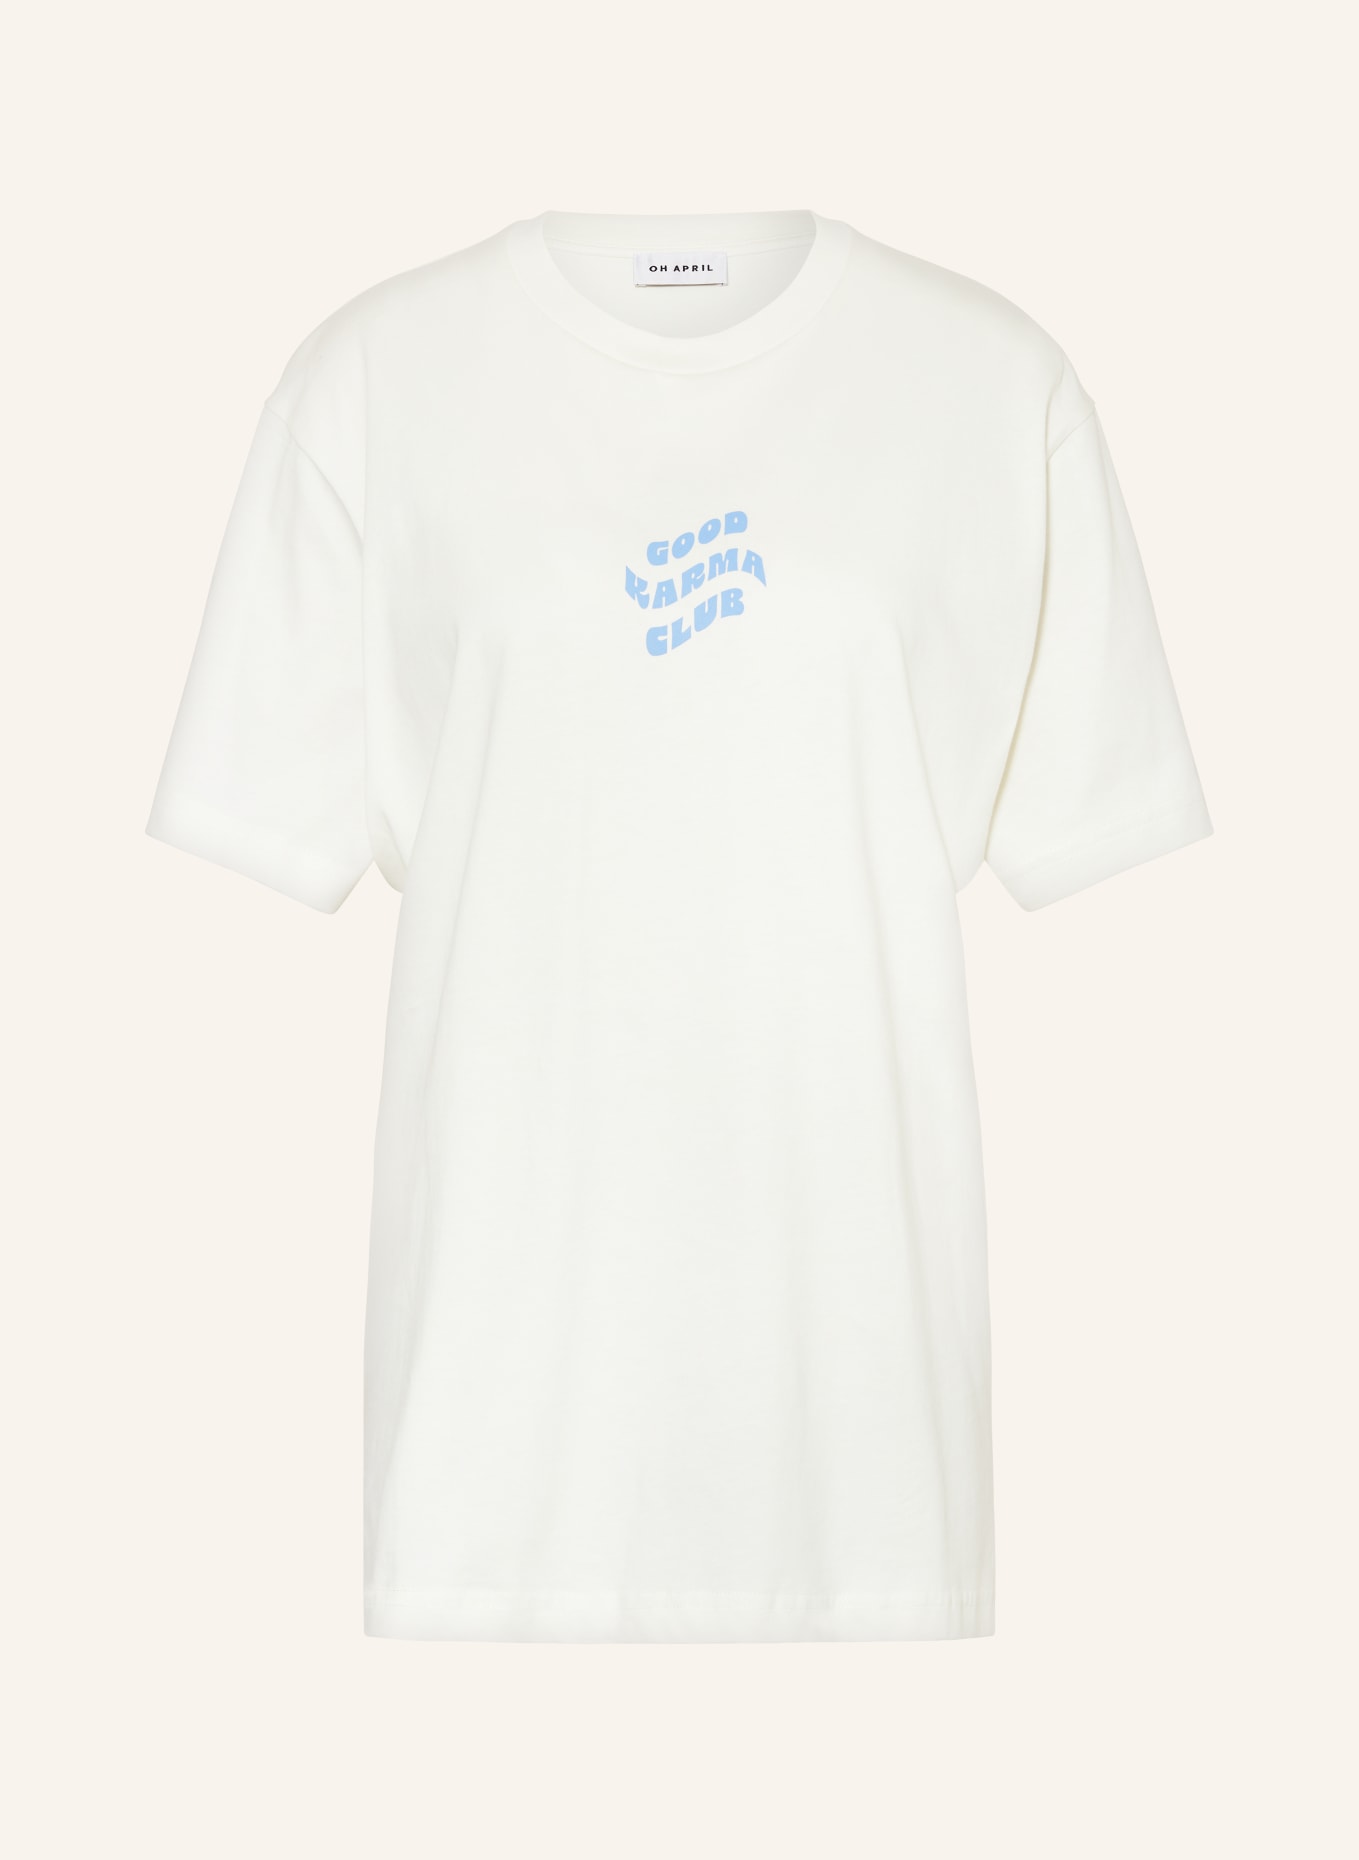 OH APRIL T-Shirt GOOD KARMA CLUB, Farbe: WEISS/ HELLBLAU (Bild 1)